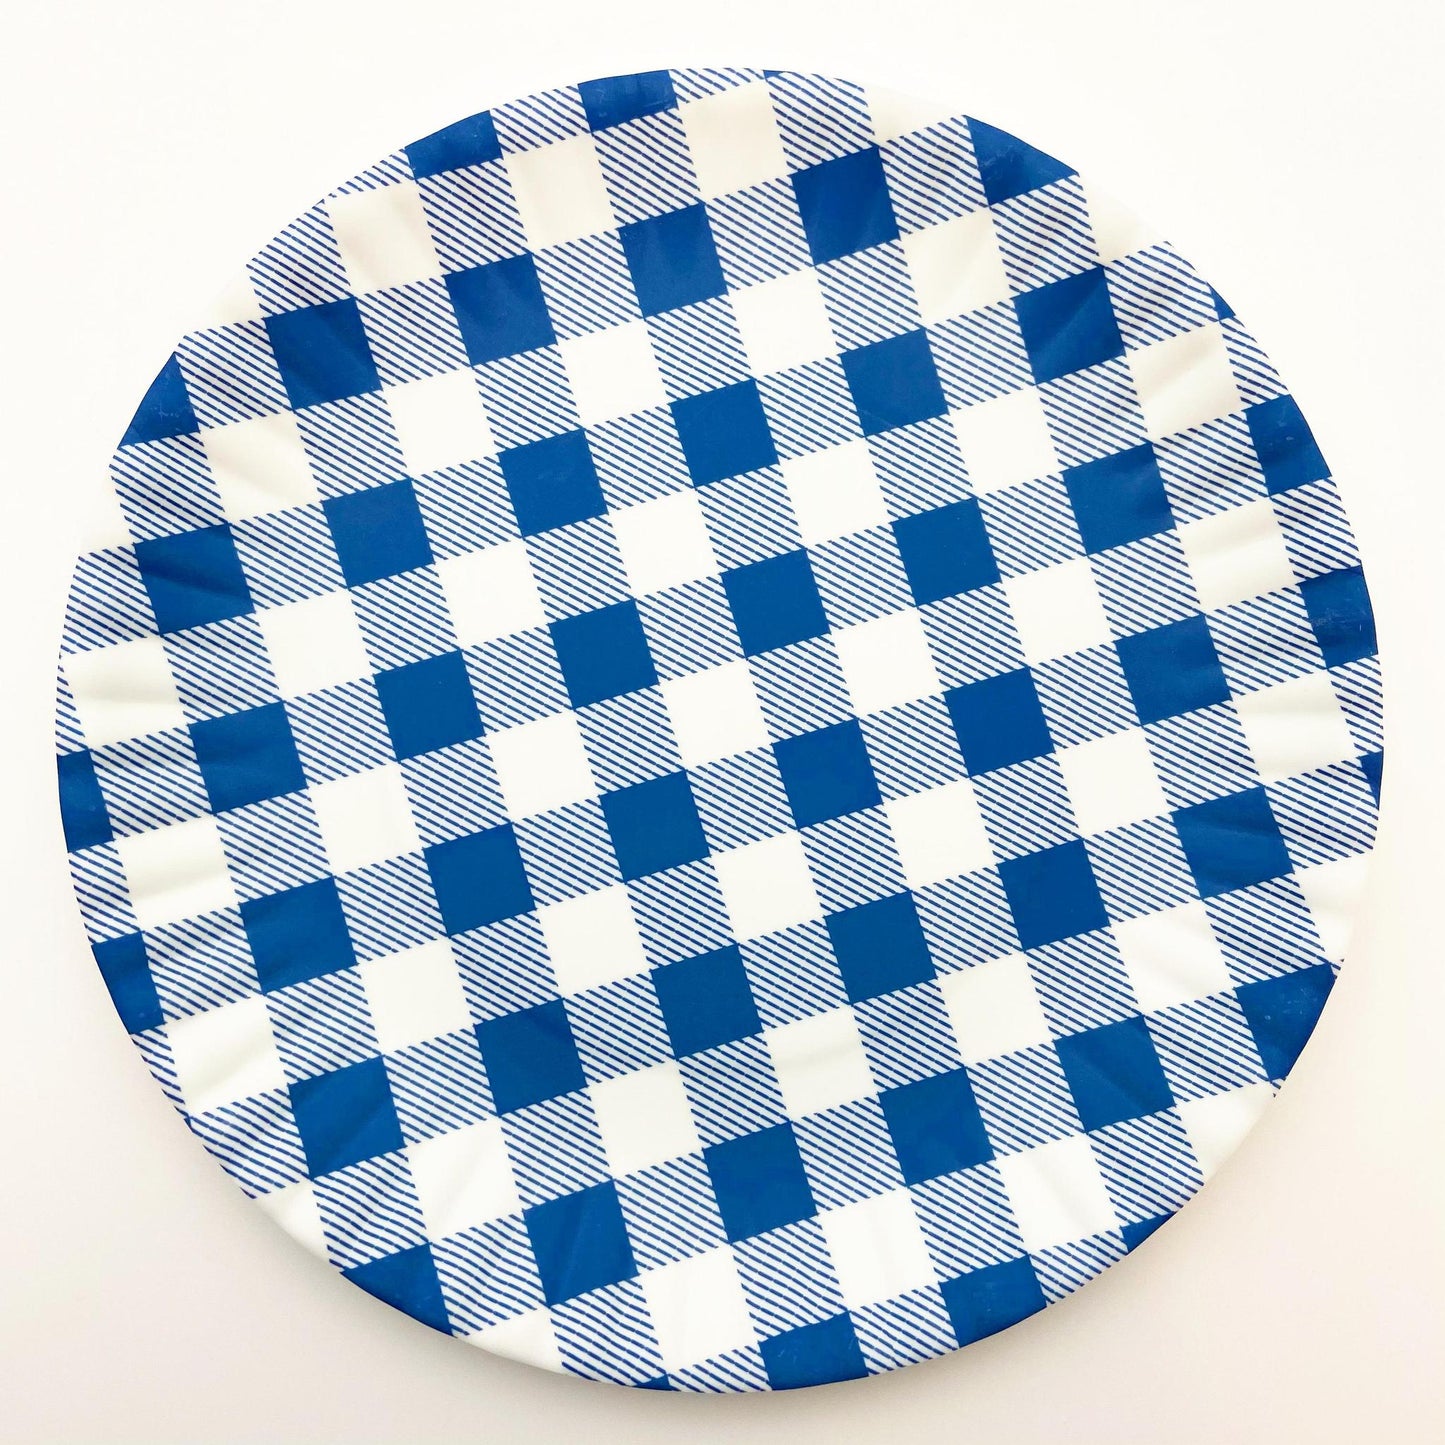 Plate - Melamine "Paper Plate" - Blue Gingham